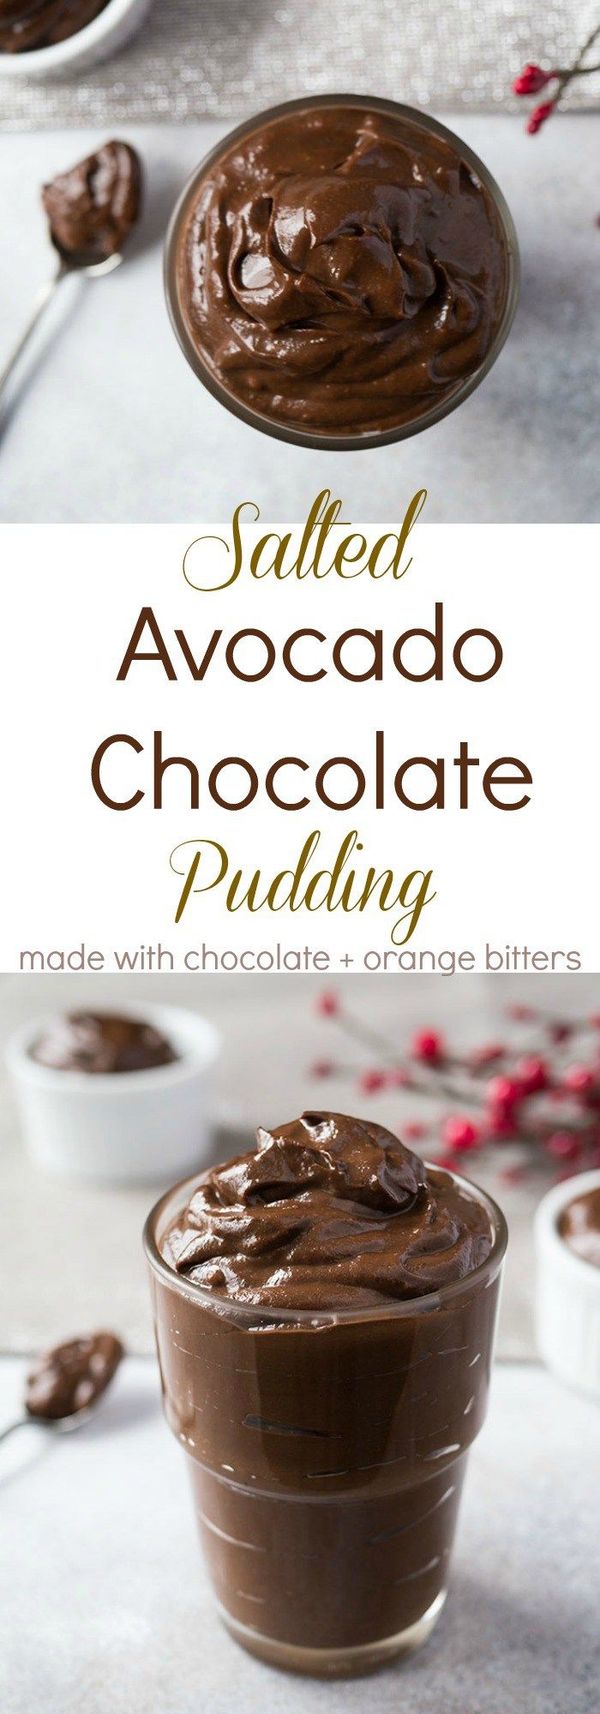 Salted Avocado Chocolate Pudding